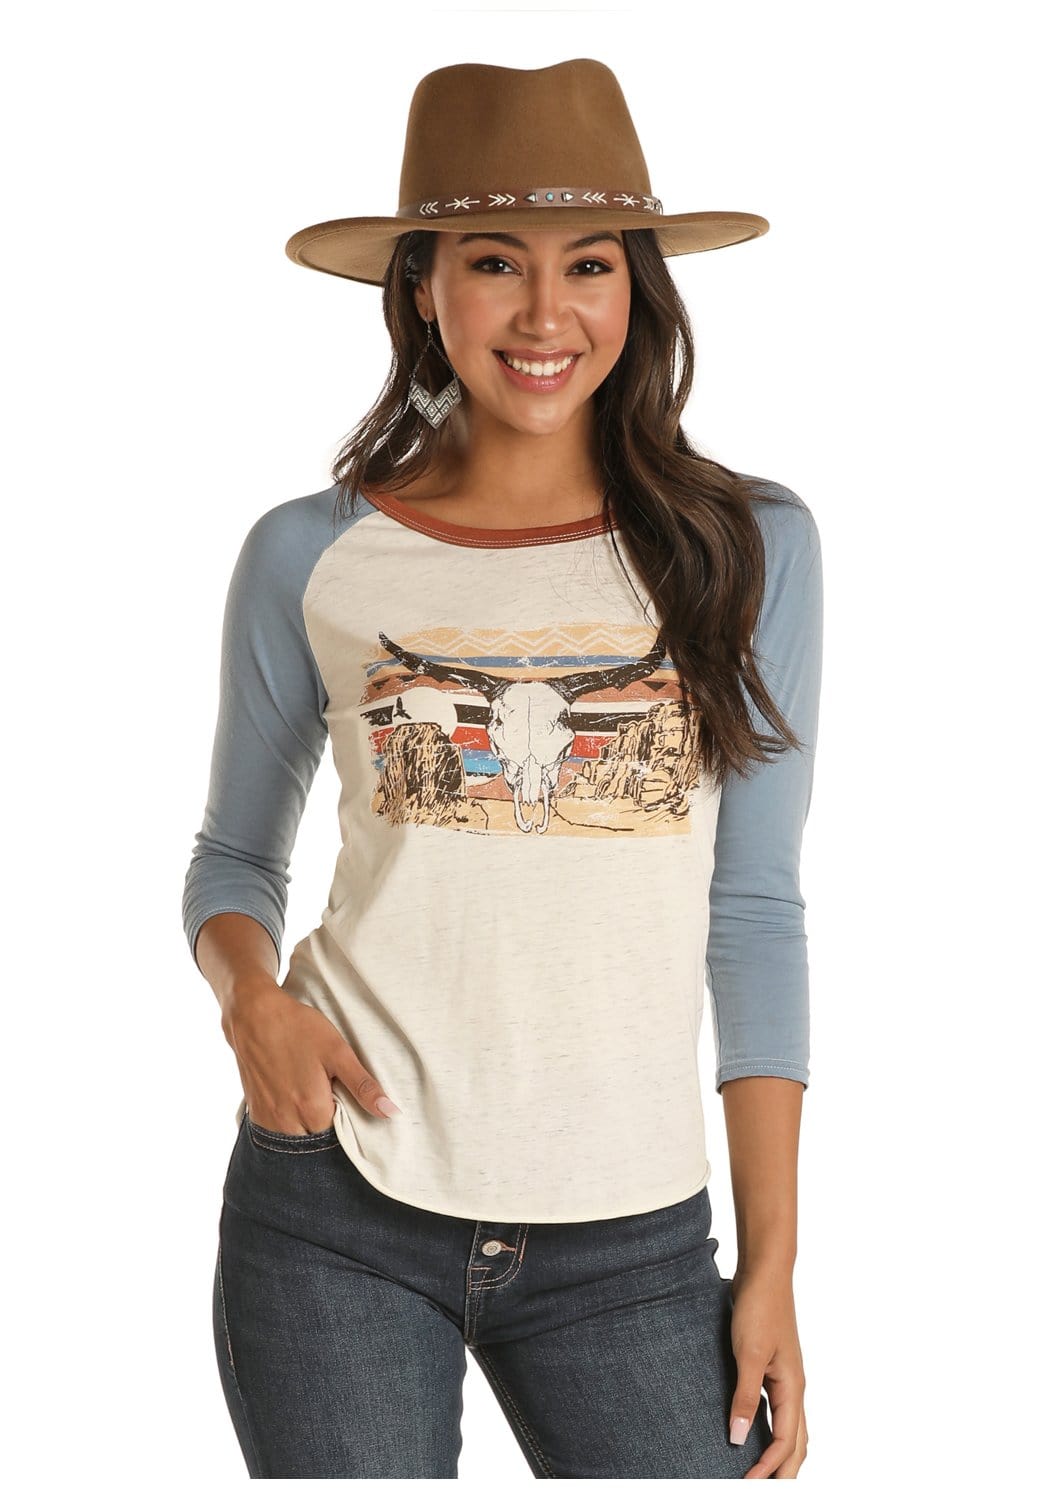 PANHANDLE Shirts Rock & Roll Cowgirl Women's Baseball Graphic T-Shirt 48T1160